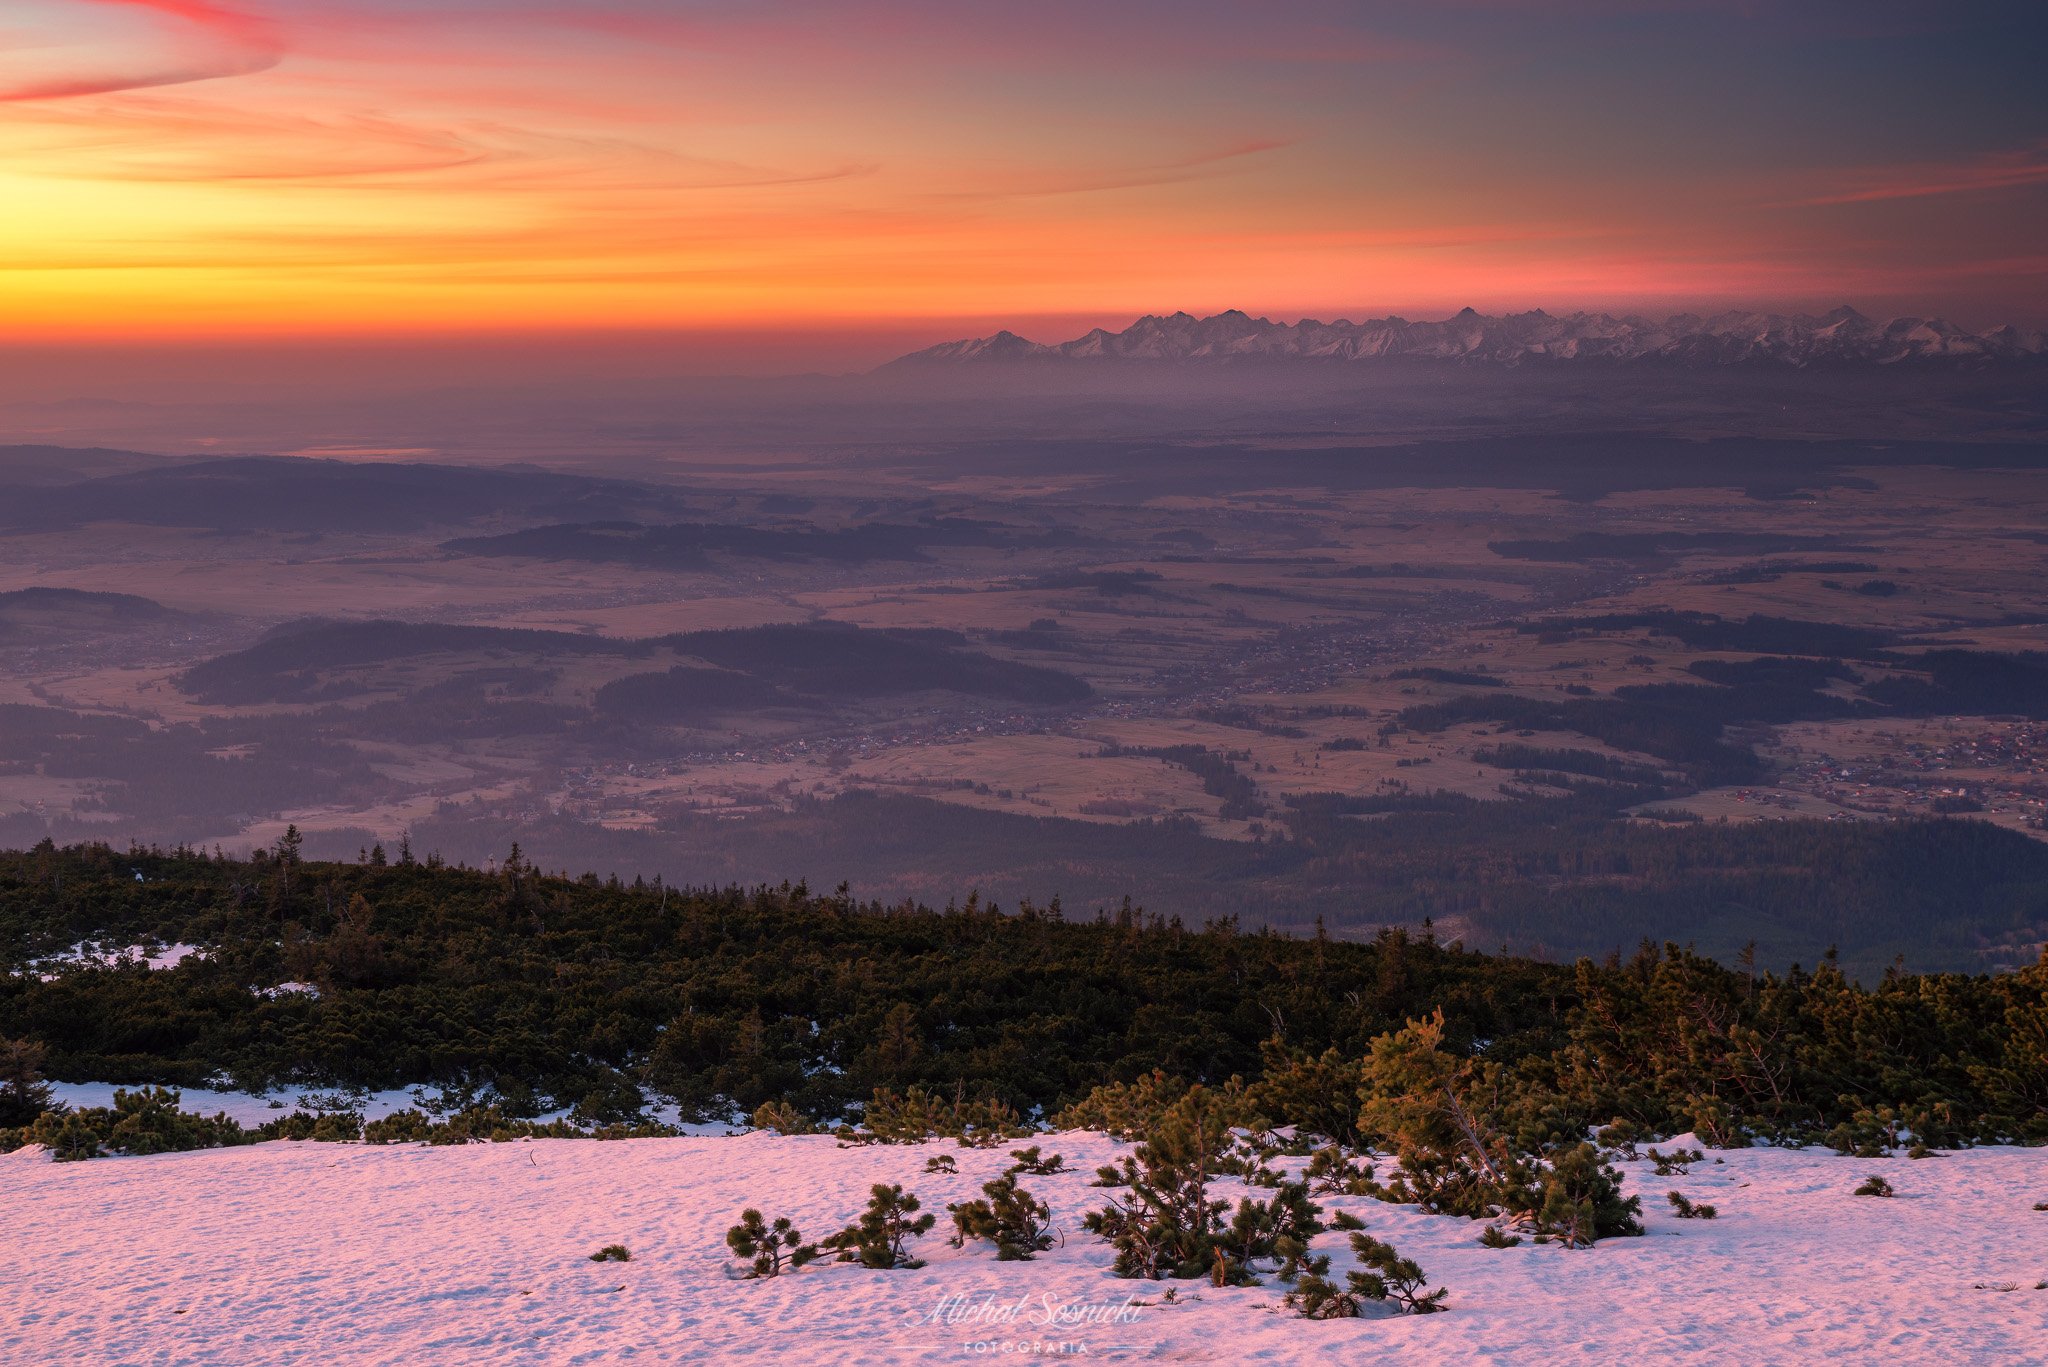 #sunrise #landscape #snow #spring #poland #pentax #benro #sky #sun, Michał Sośnicki